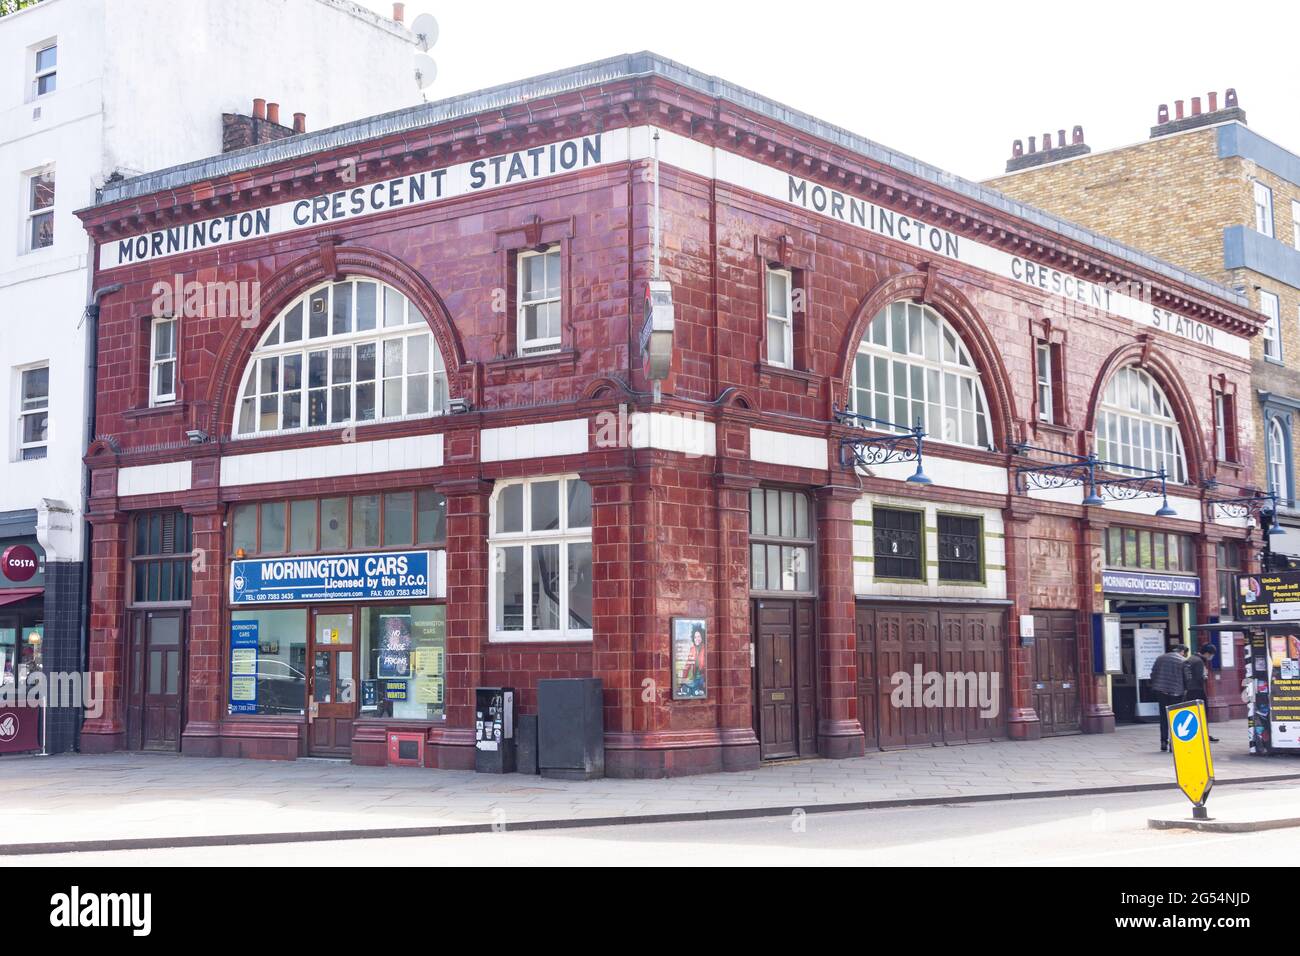 Mornington Crescent Underground Station, Camden High Street, Camden Town, London Borough of Camden, Greater London, England, United Kingdom Stock Photo